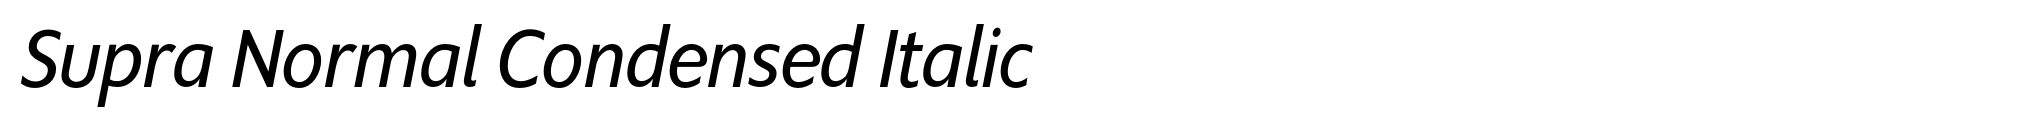 Supra Normal Condensed Italic image